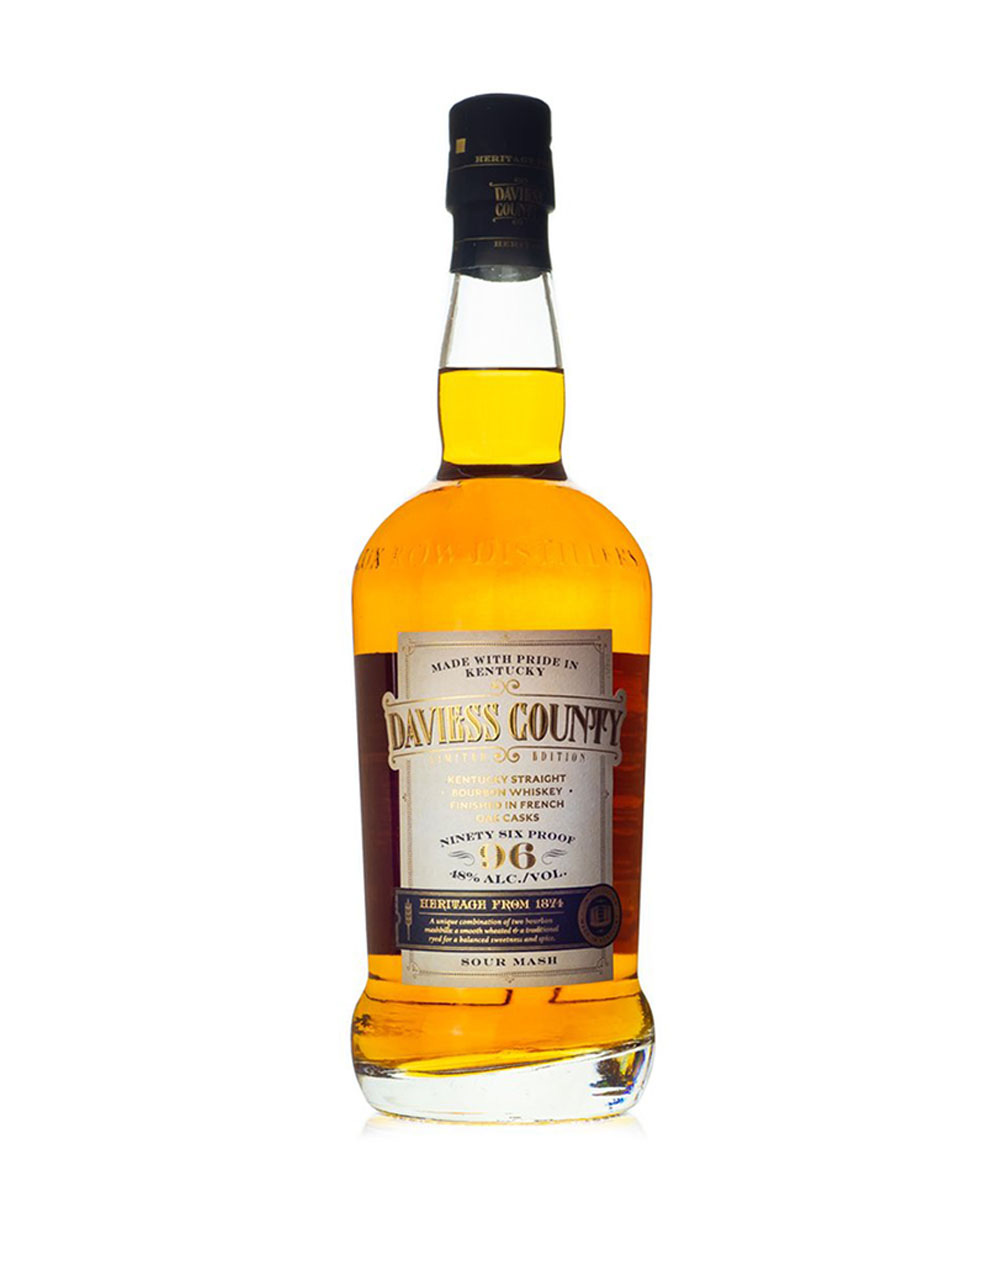 Daviess County sour mash 96 proof limited edition Oak Casks Kentucky Straight Bourbon Whiskey